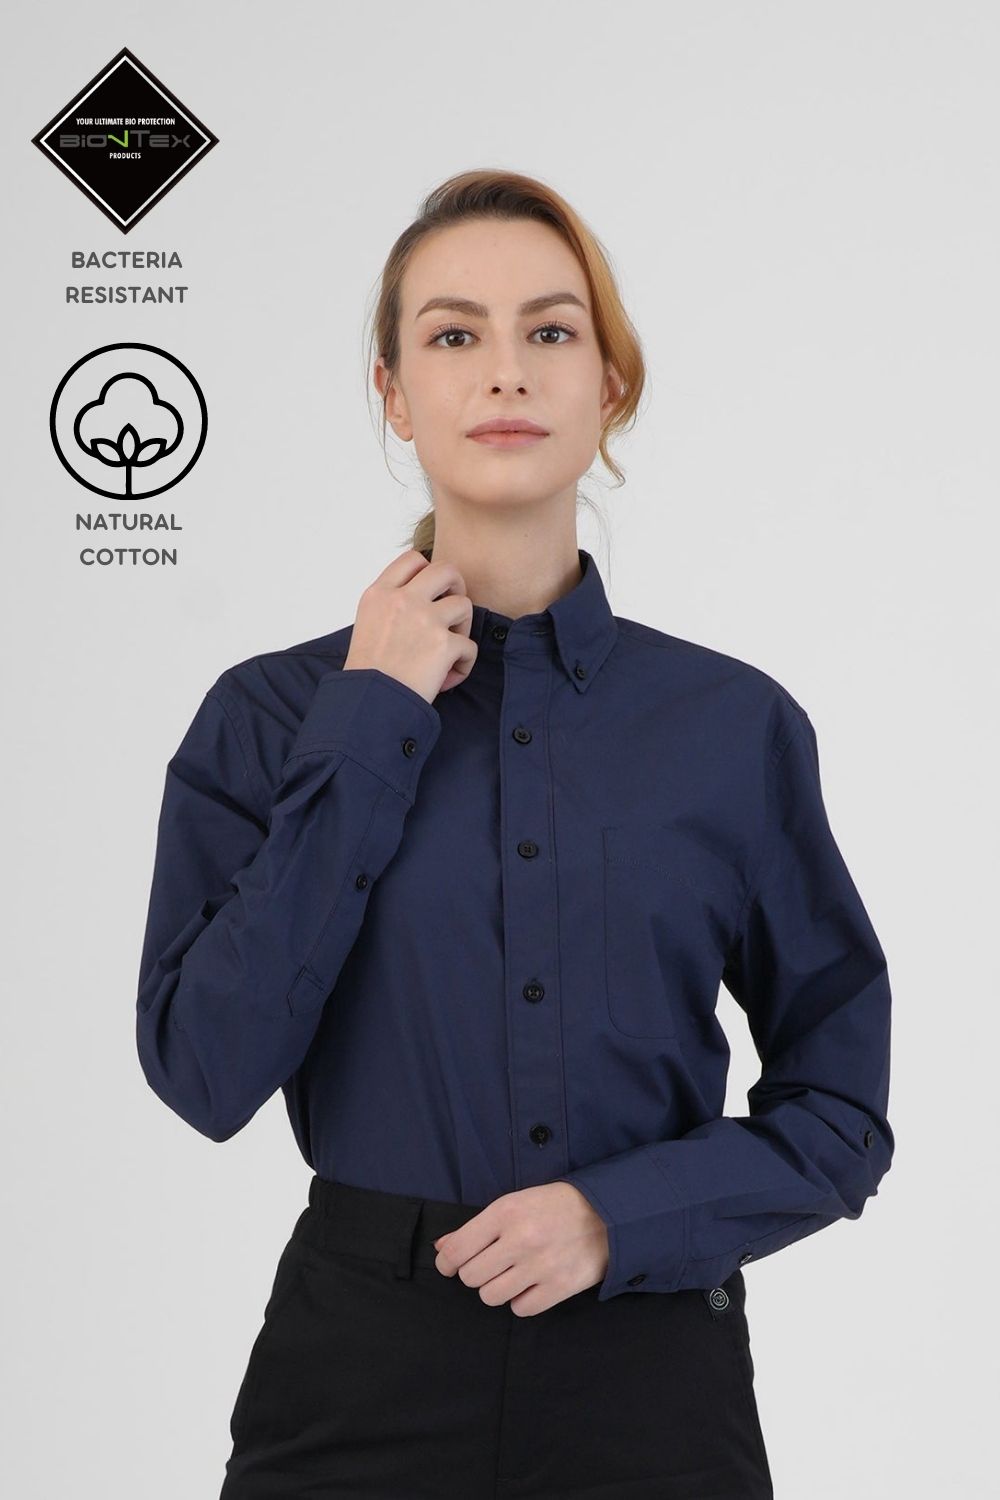 Women's BioNTex™ Button Down Collar Shirt